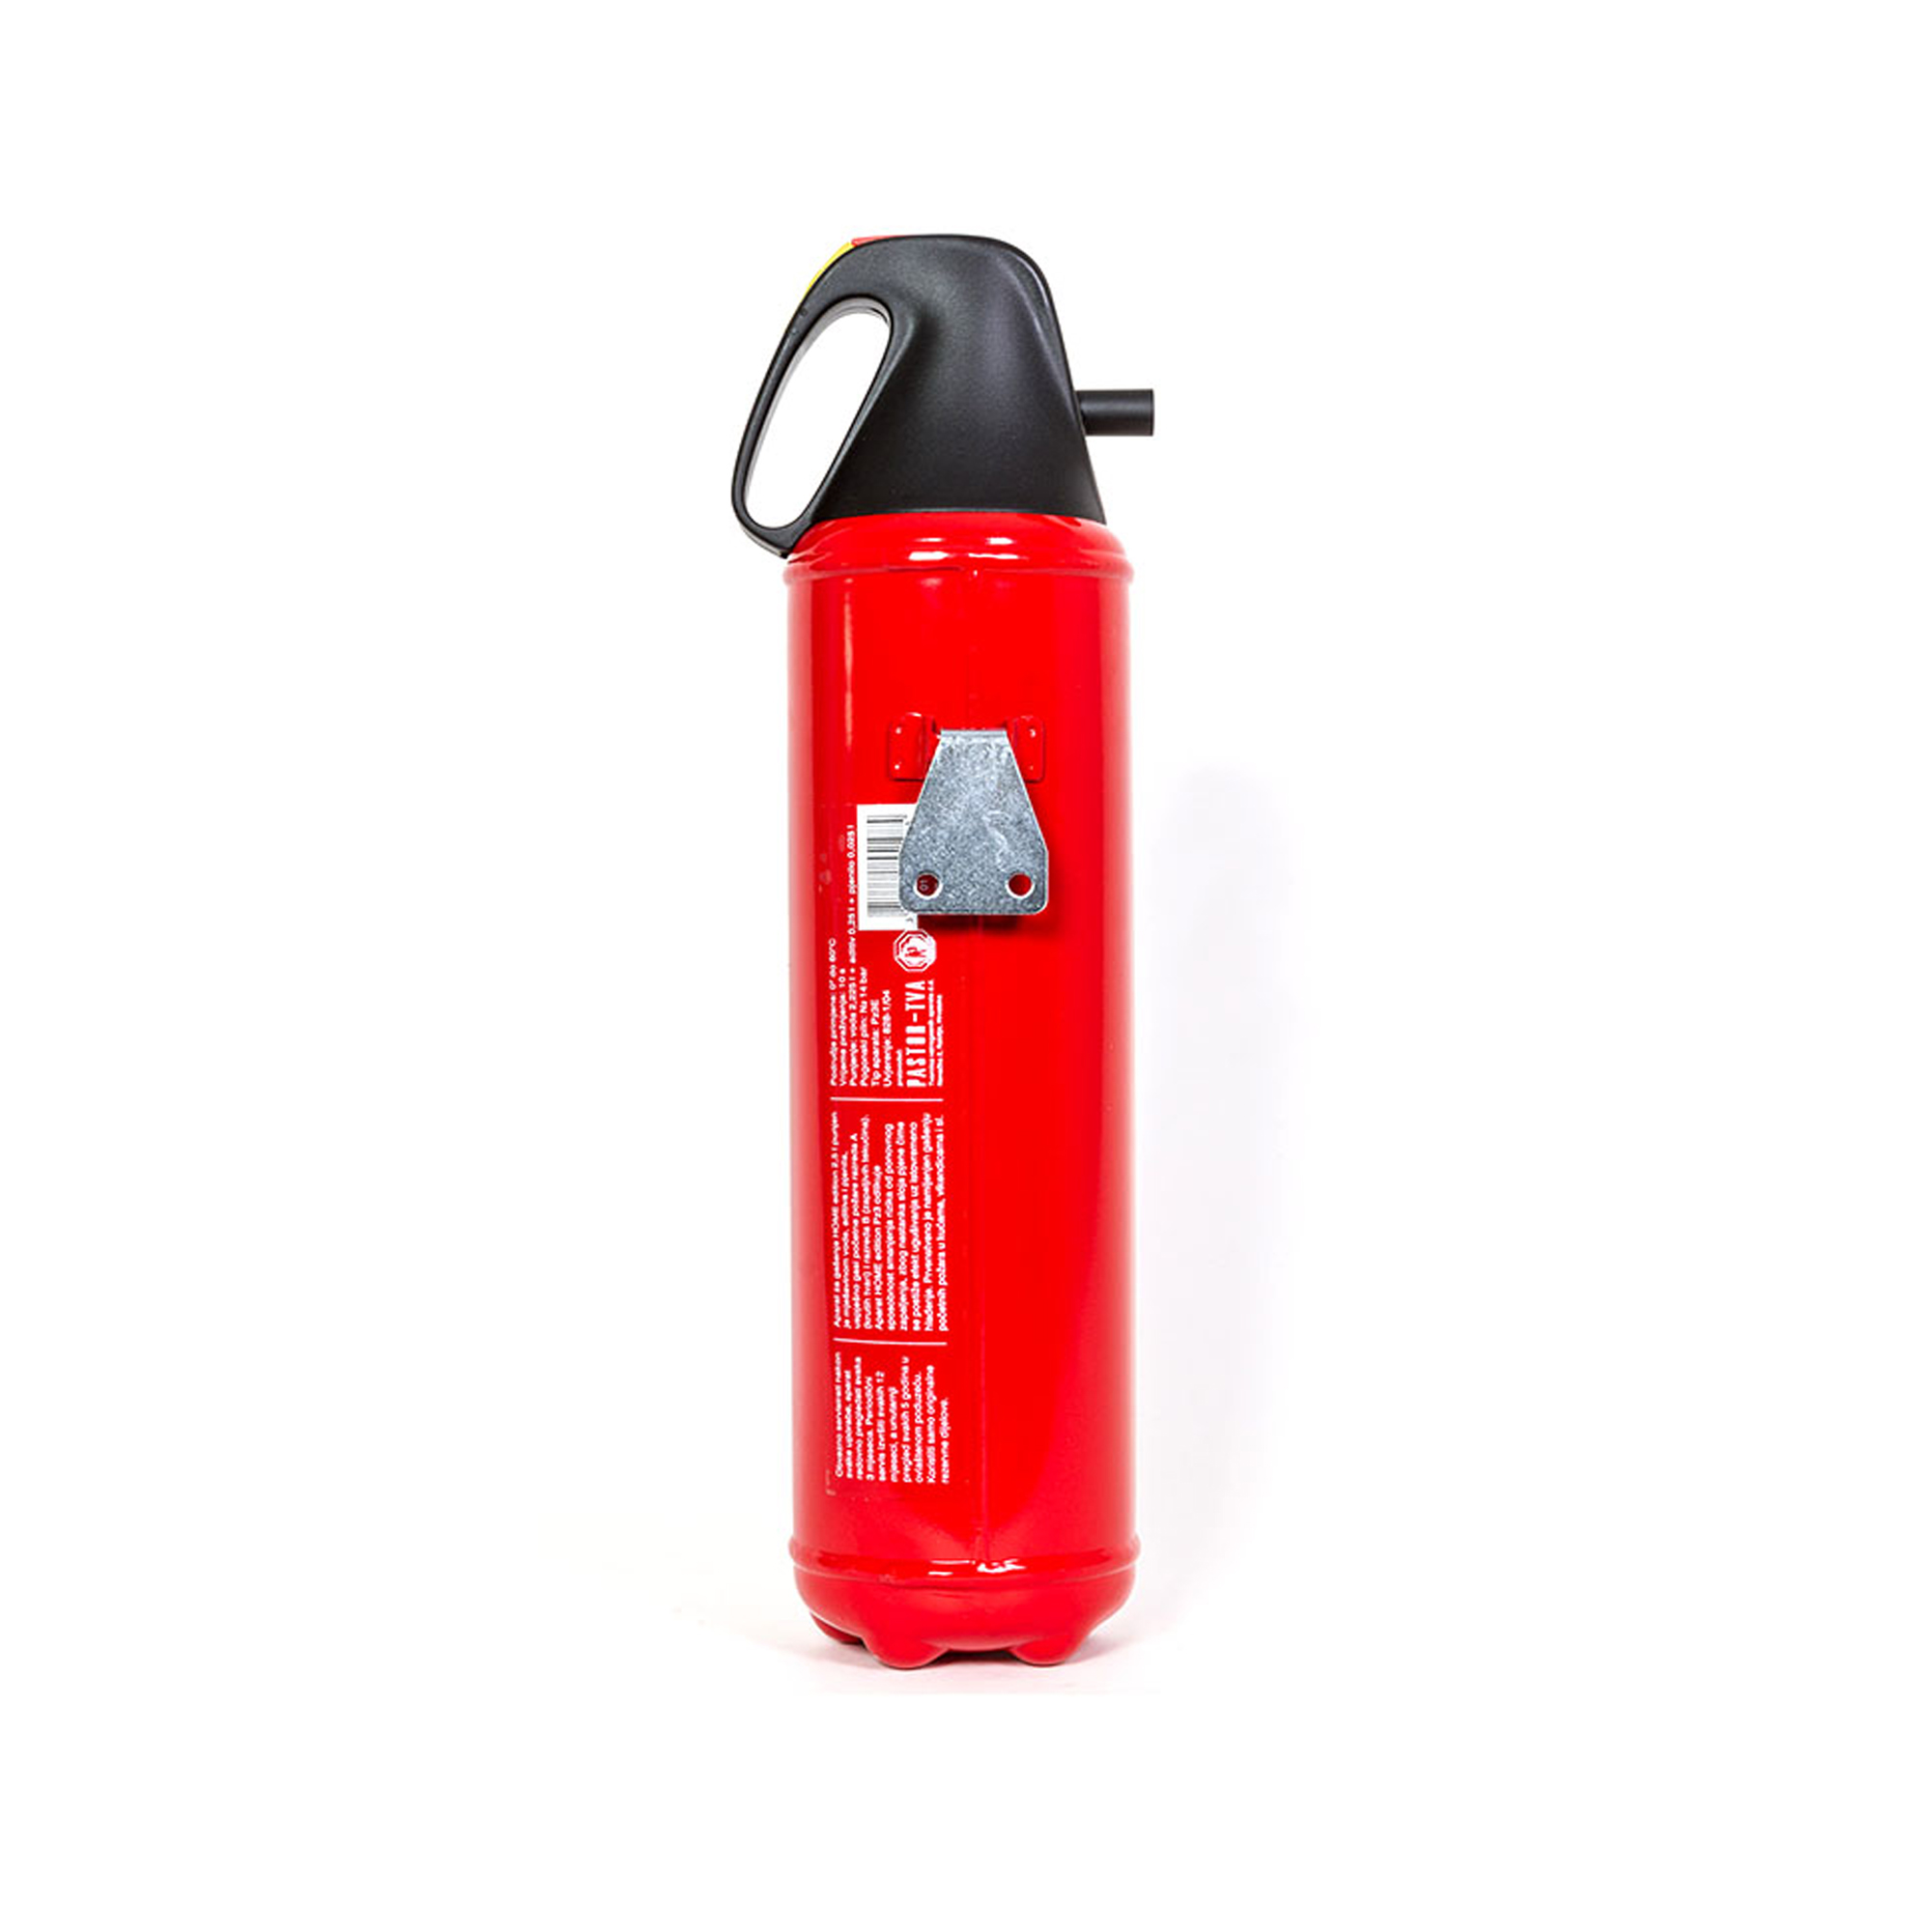 Fire extinguisher Pz3E Home Edition